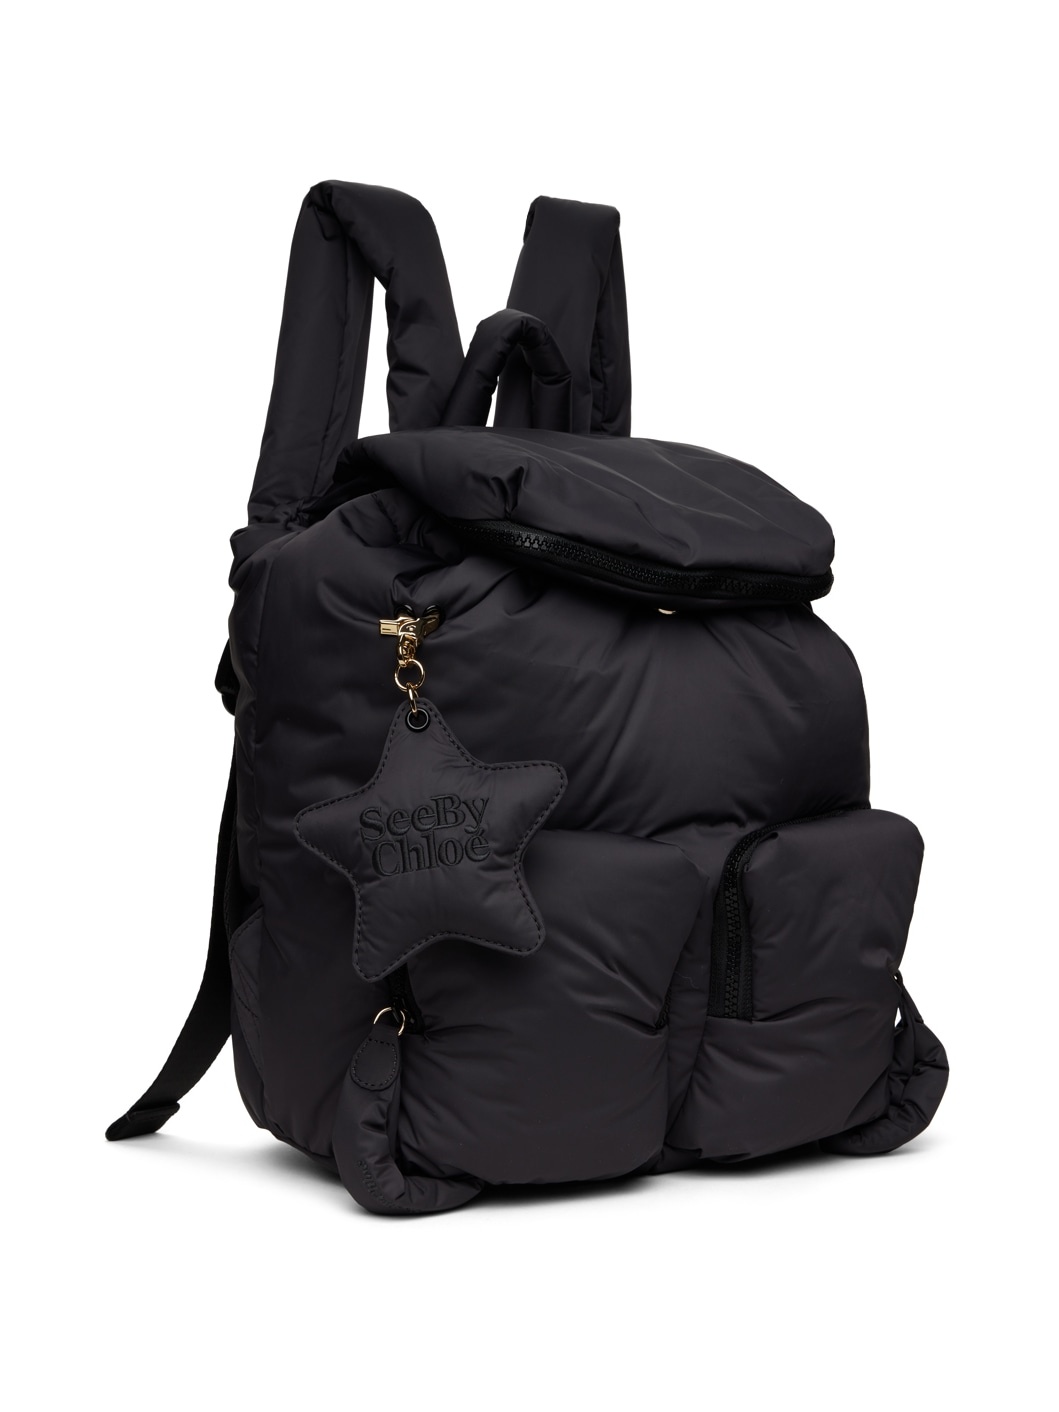 Gray Joy Rider Backpack - 2